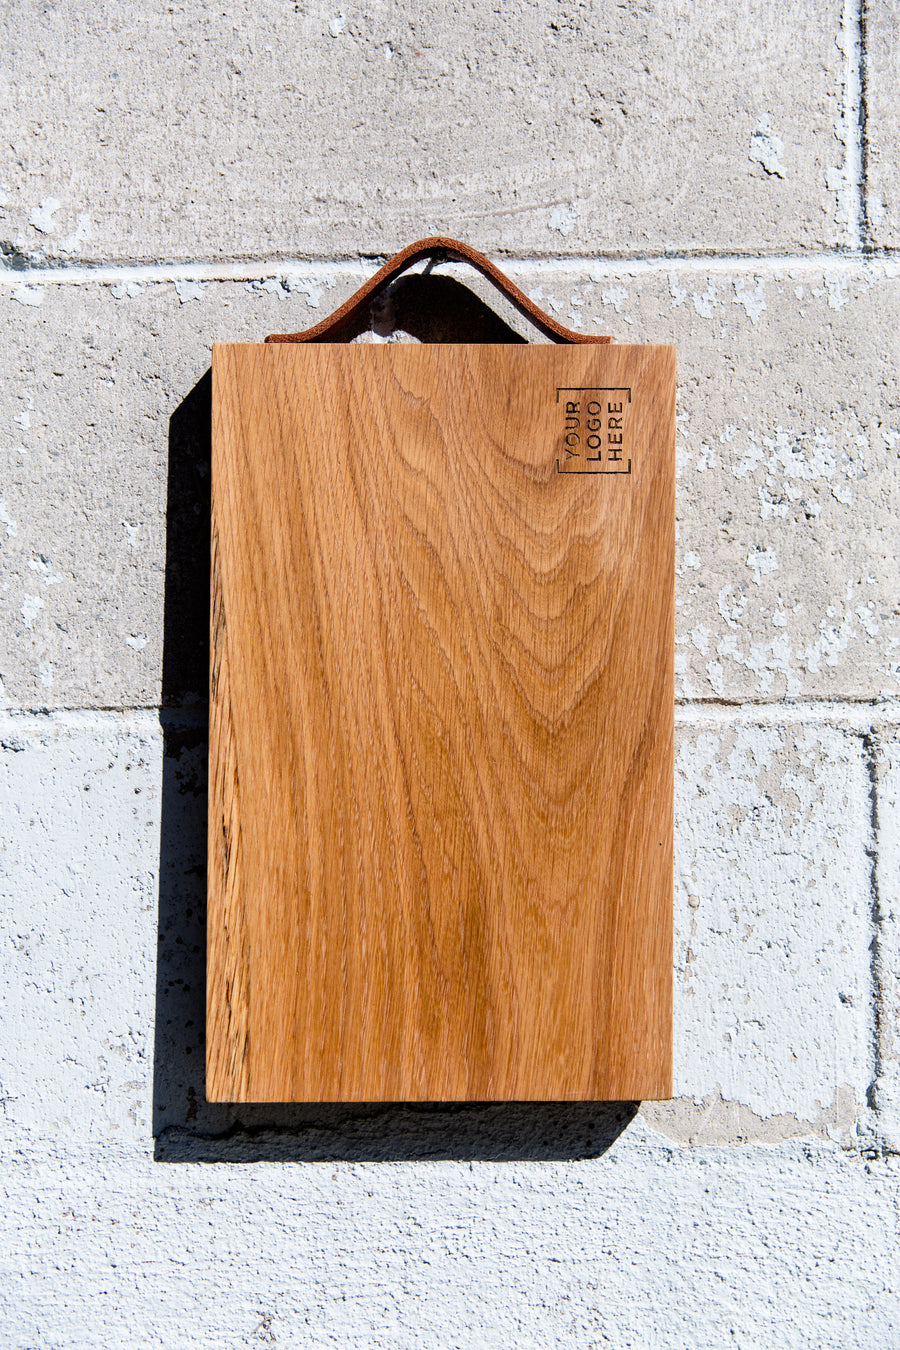 custom wood cutting board with leather handle